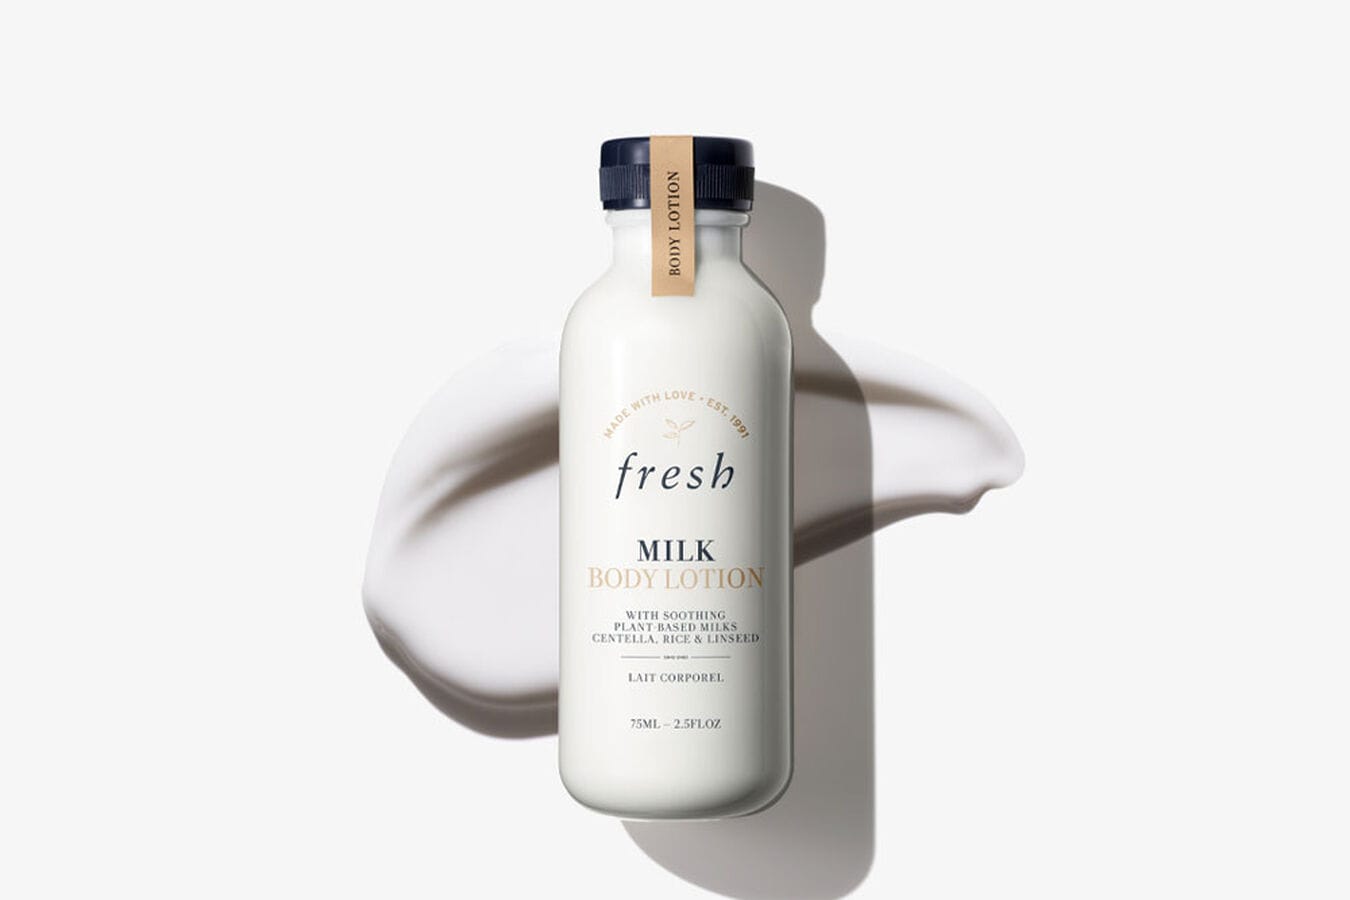 Plant based milk body lotion in a bottle